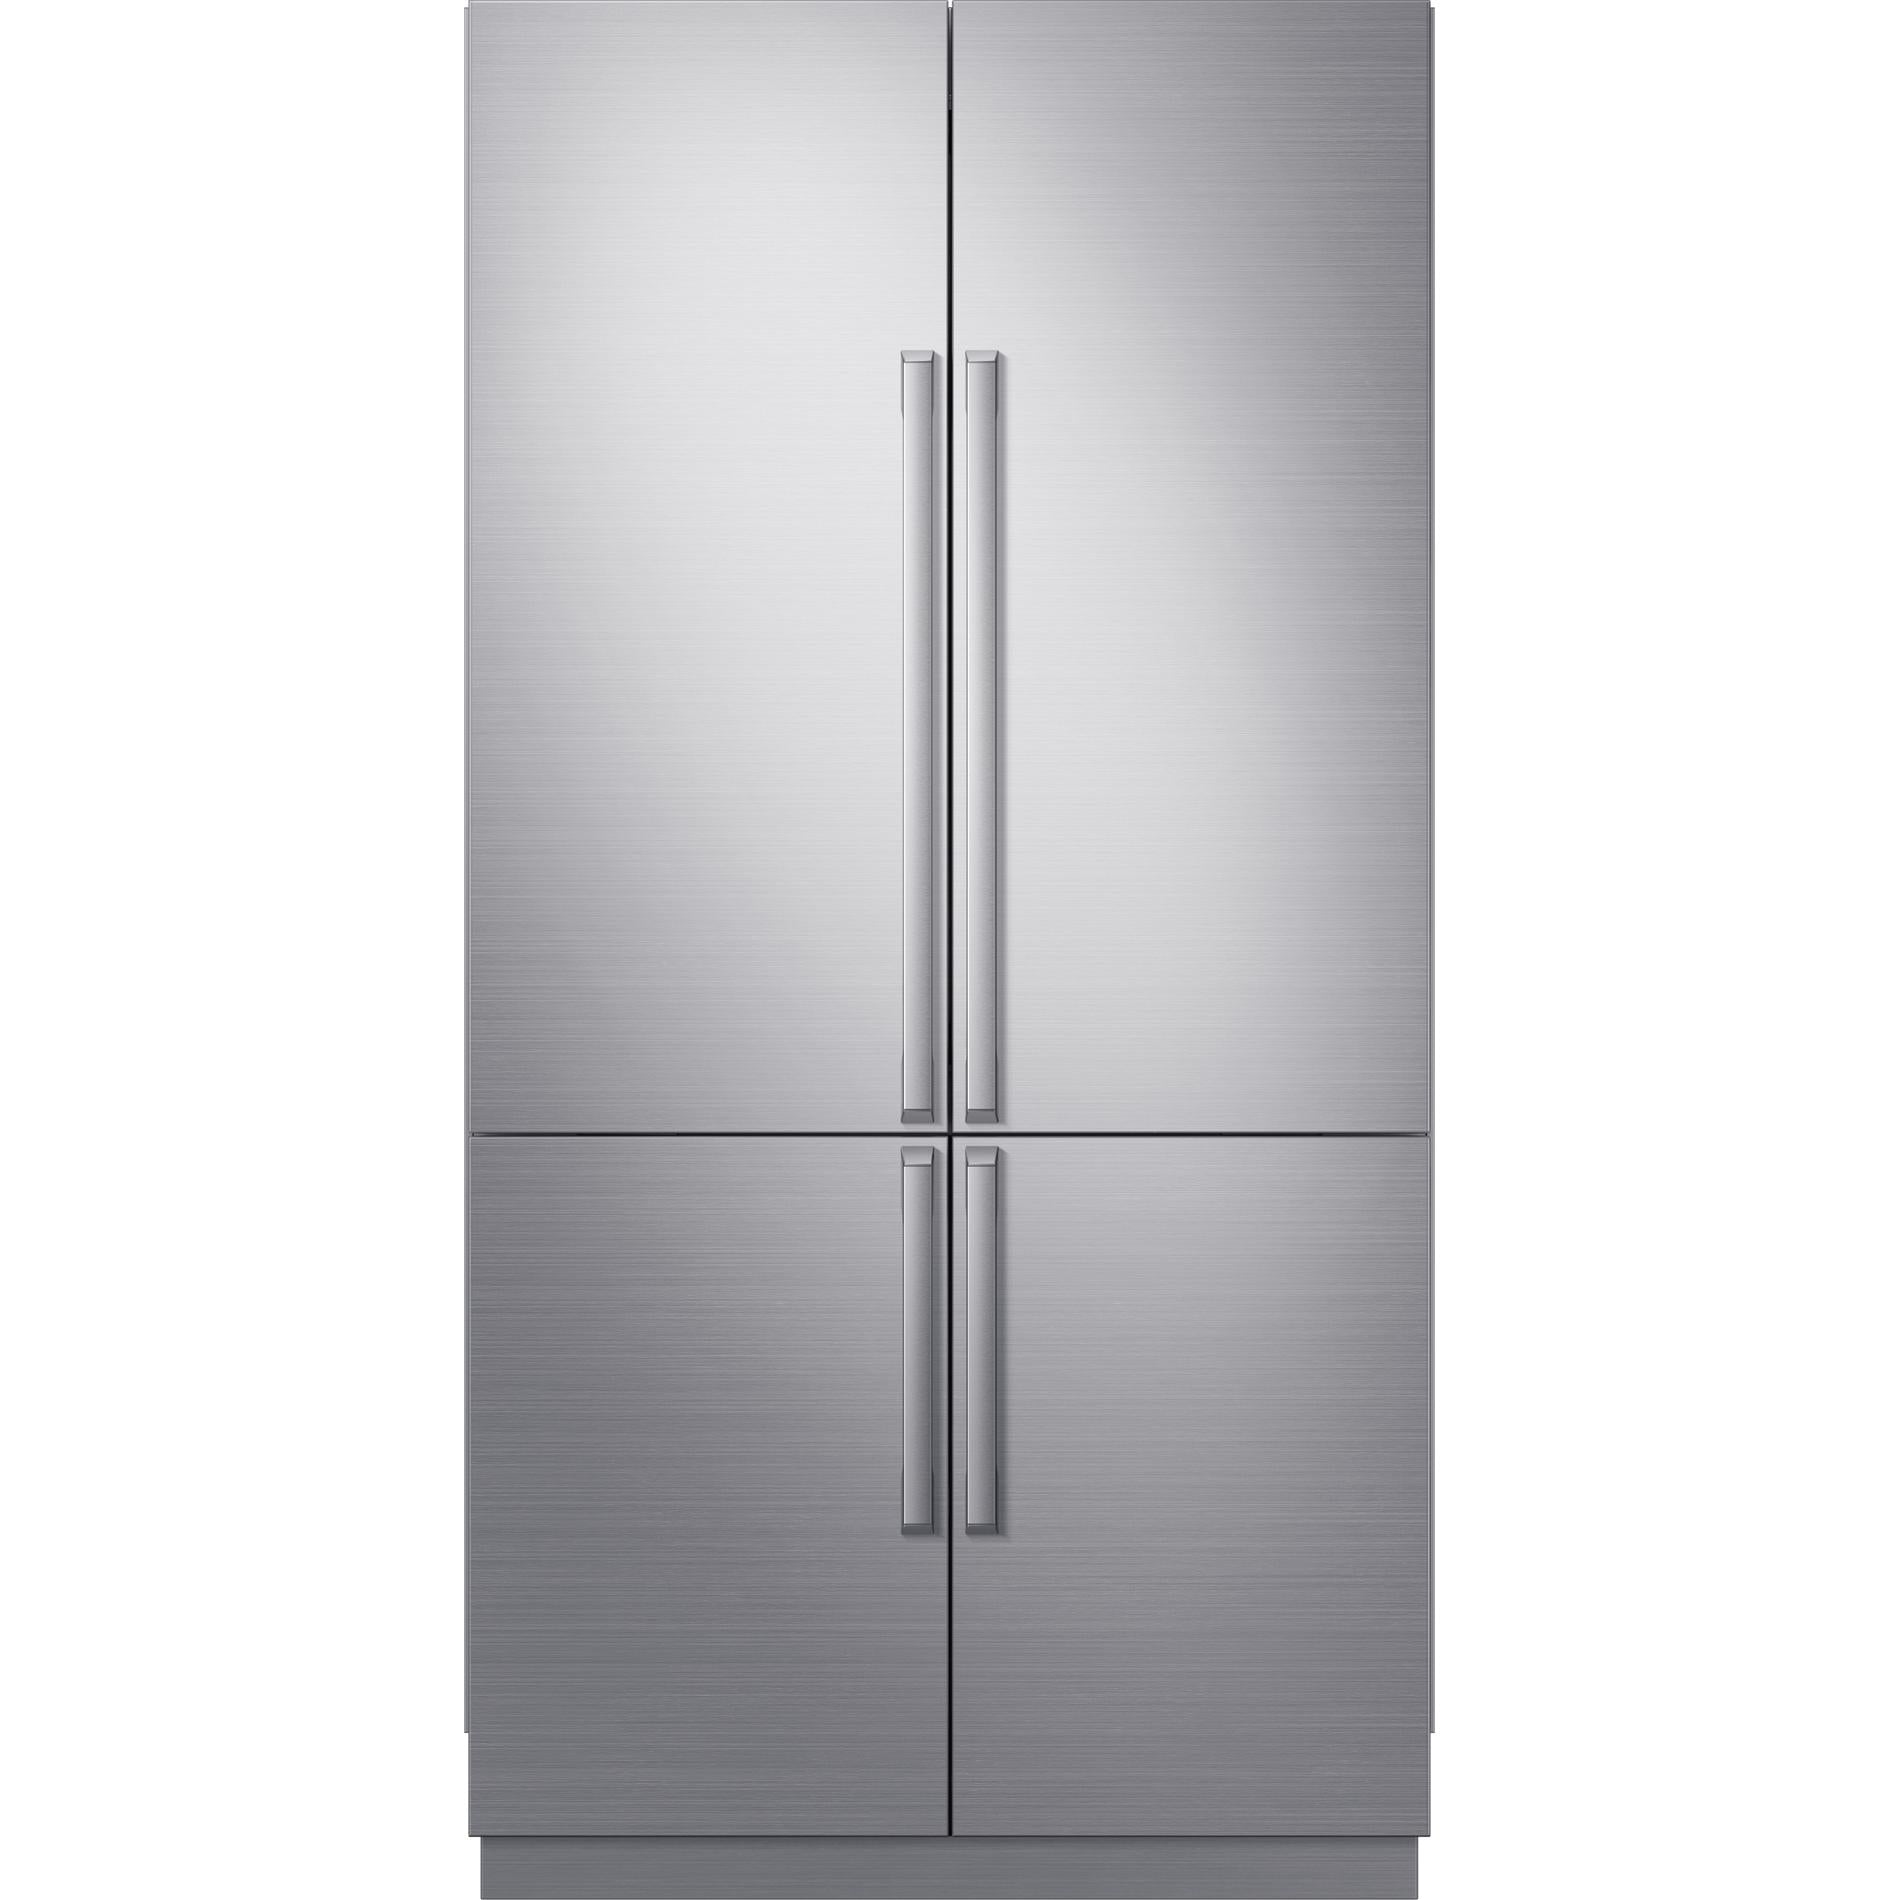 Samsung Refrigeration Accessories Panels RAT42ACAAS4/AA